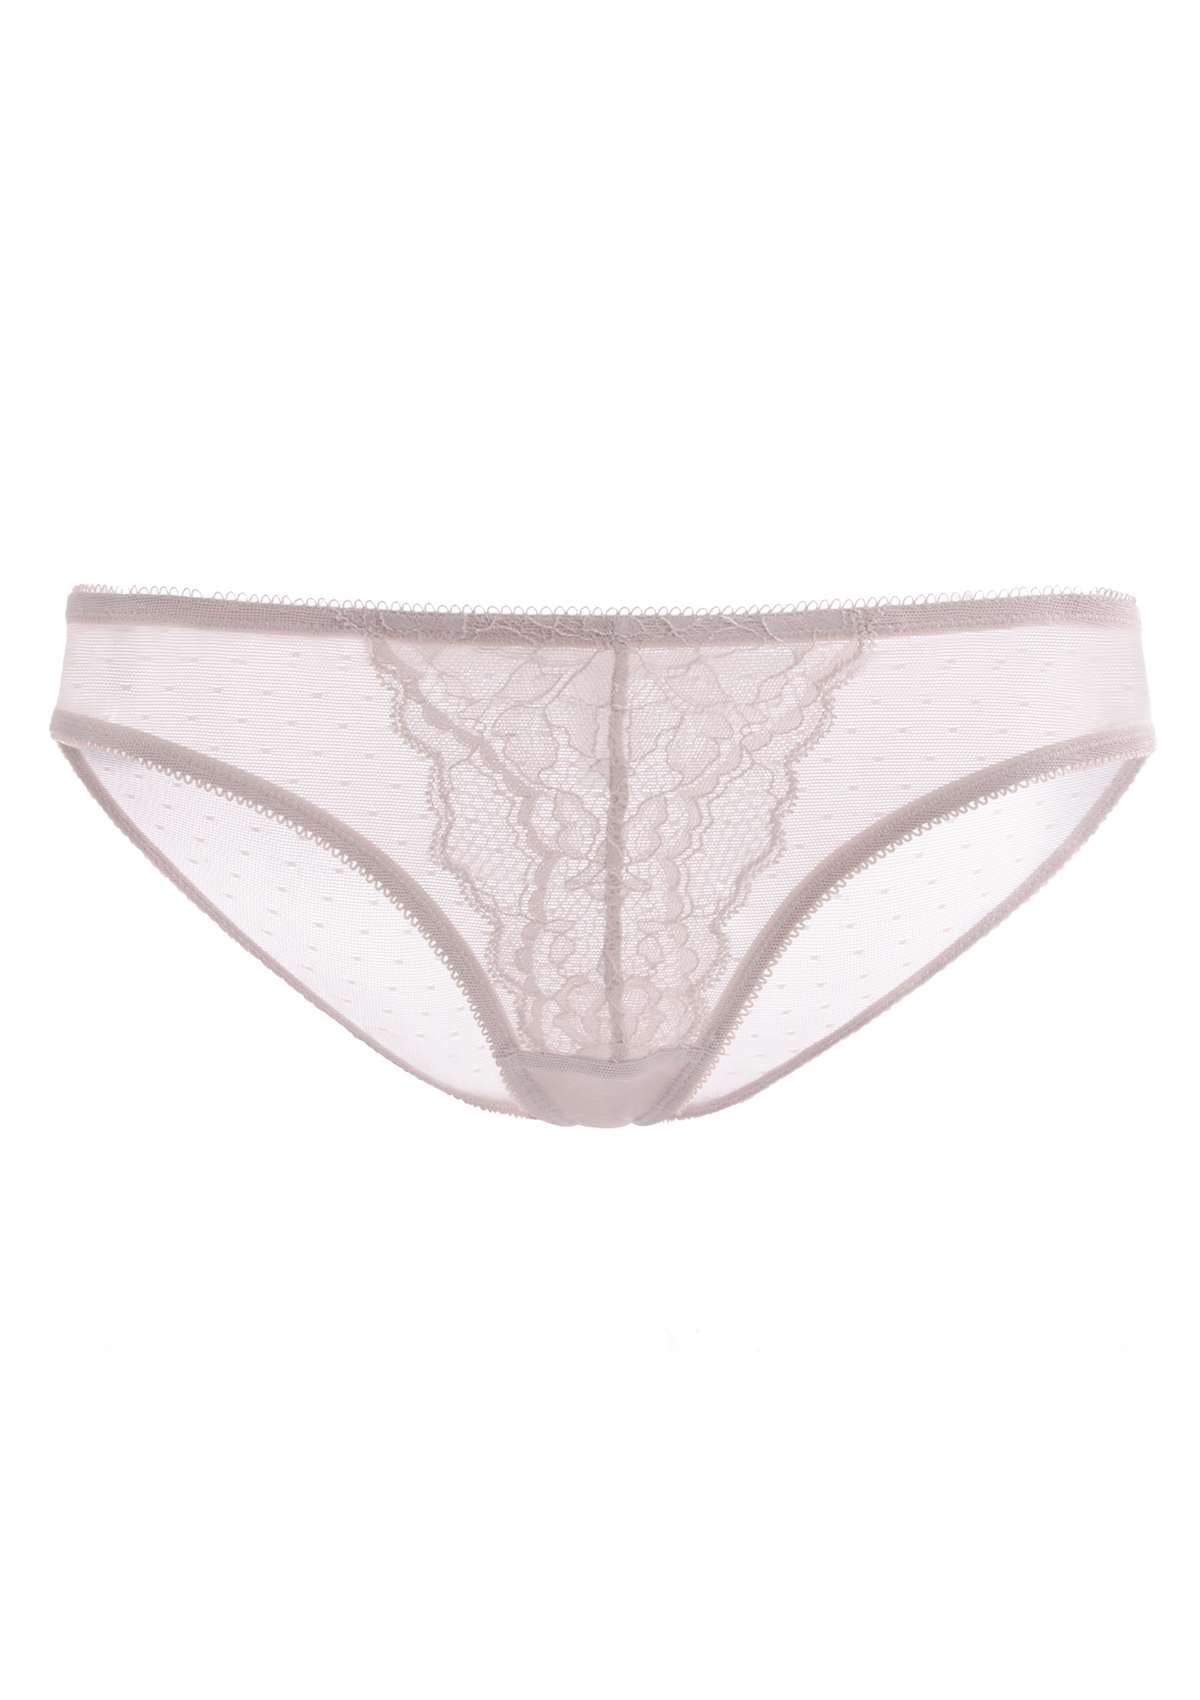 HSIA Enchante Sheer Lace Mesh Mid Rise Bikini Underwear - M / White